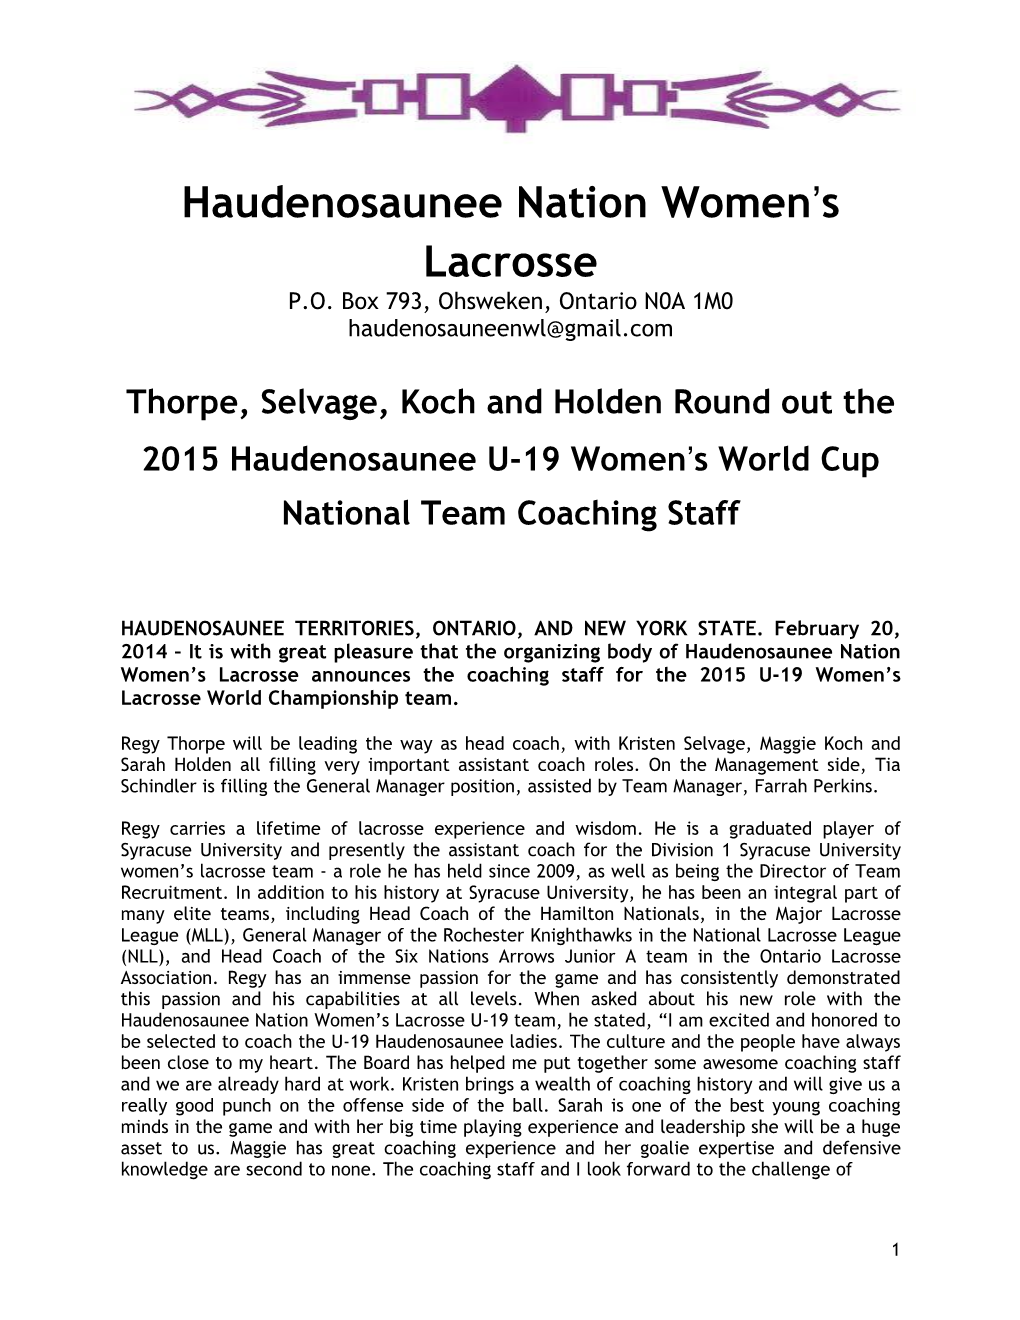 Haudenosaunee Nation Women's Lacrosse